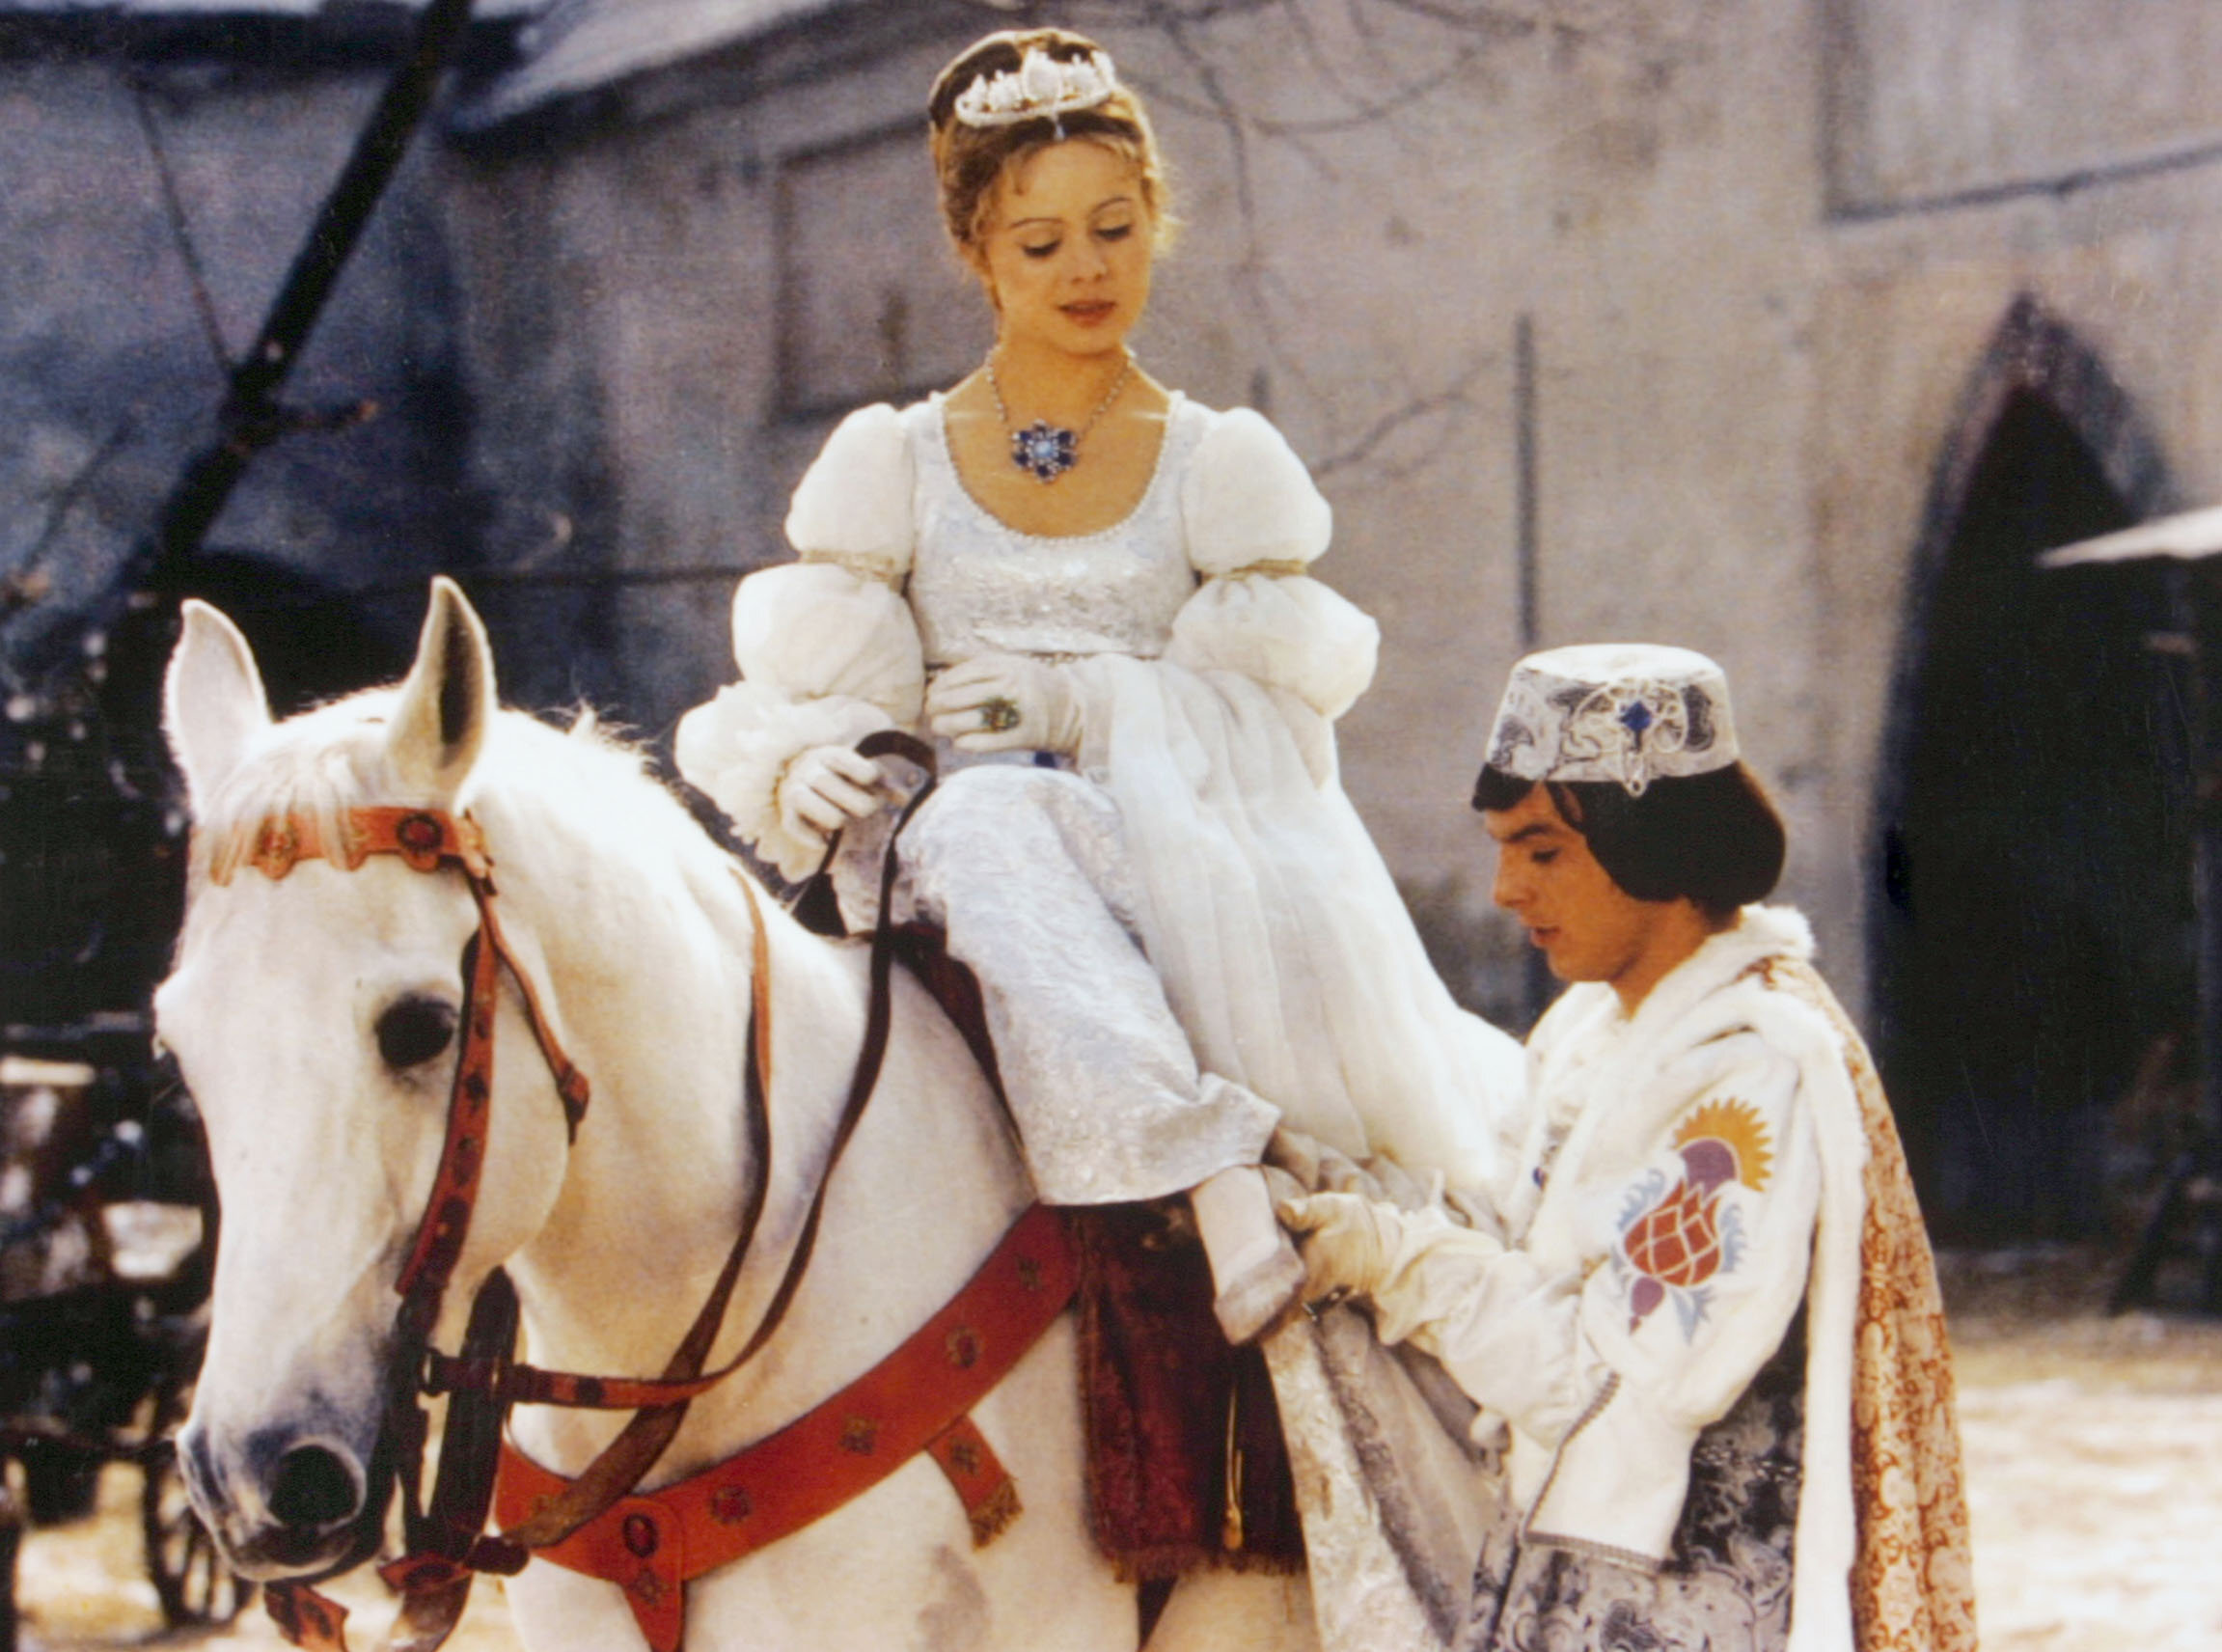 Der Prinz (Pavel Trávnícek) passt Aschenbrödel (Libuse Safránková) den verlorenen Schuh an - eine Szene aus „Drei Haselnüsse für Aschenbrödel“.